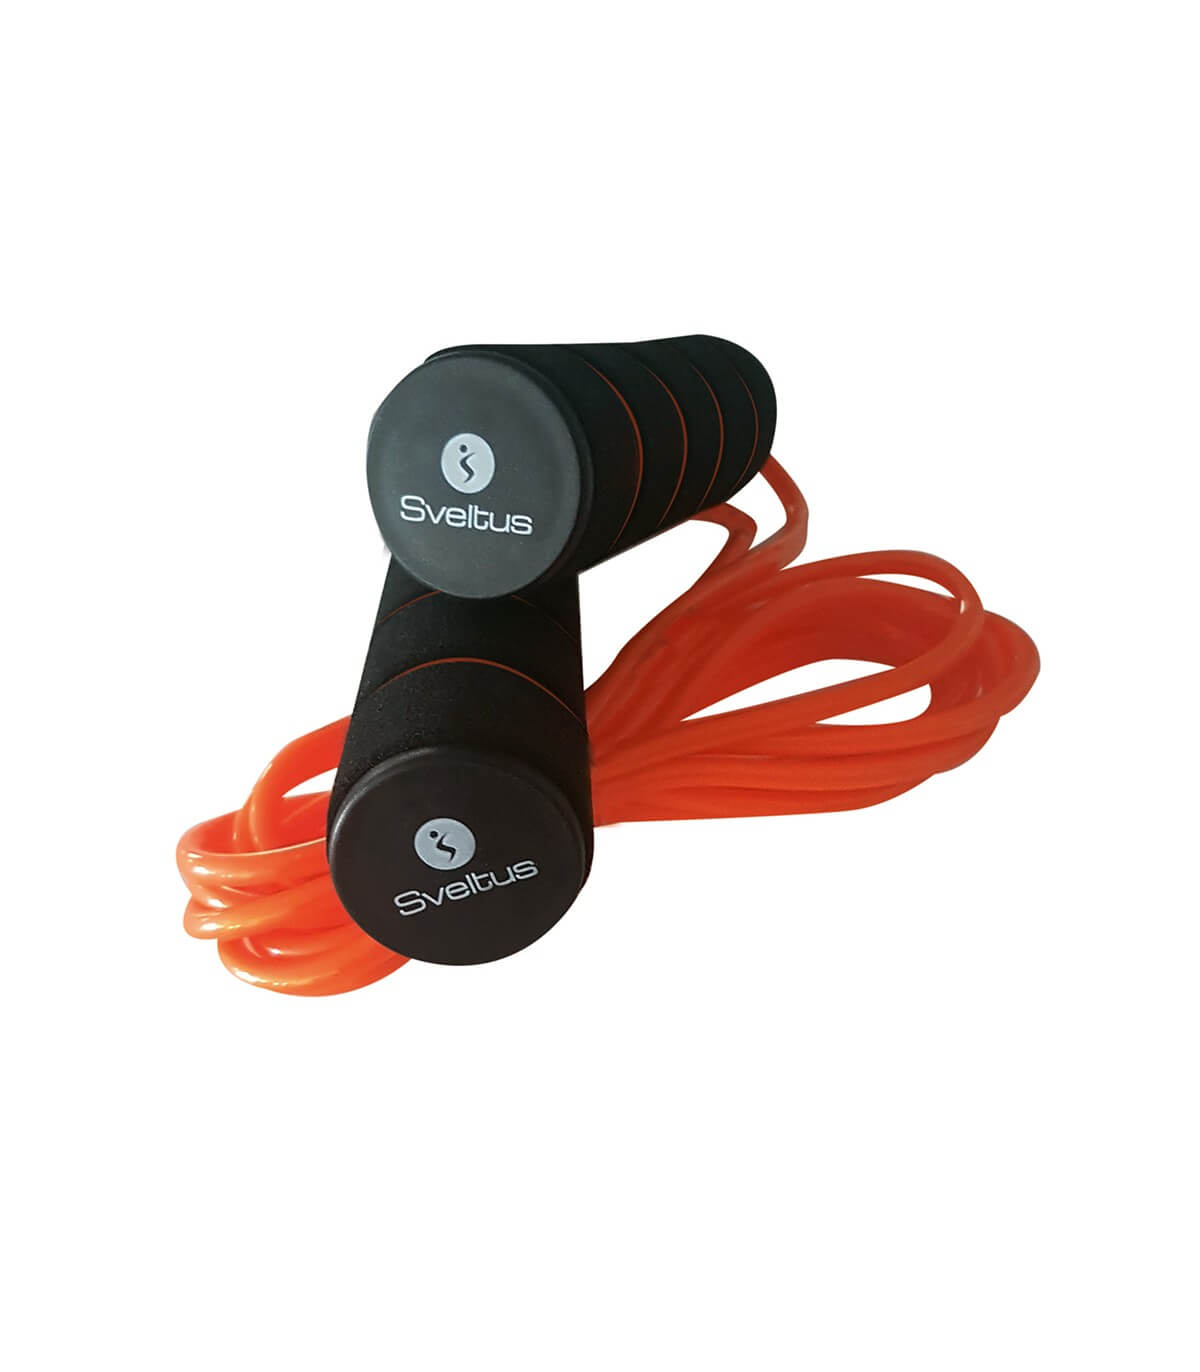 Cuerda para saltar de PVC, 3 metros de longitud, con peso regulable. Color naranja